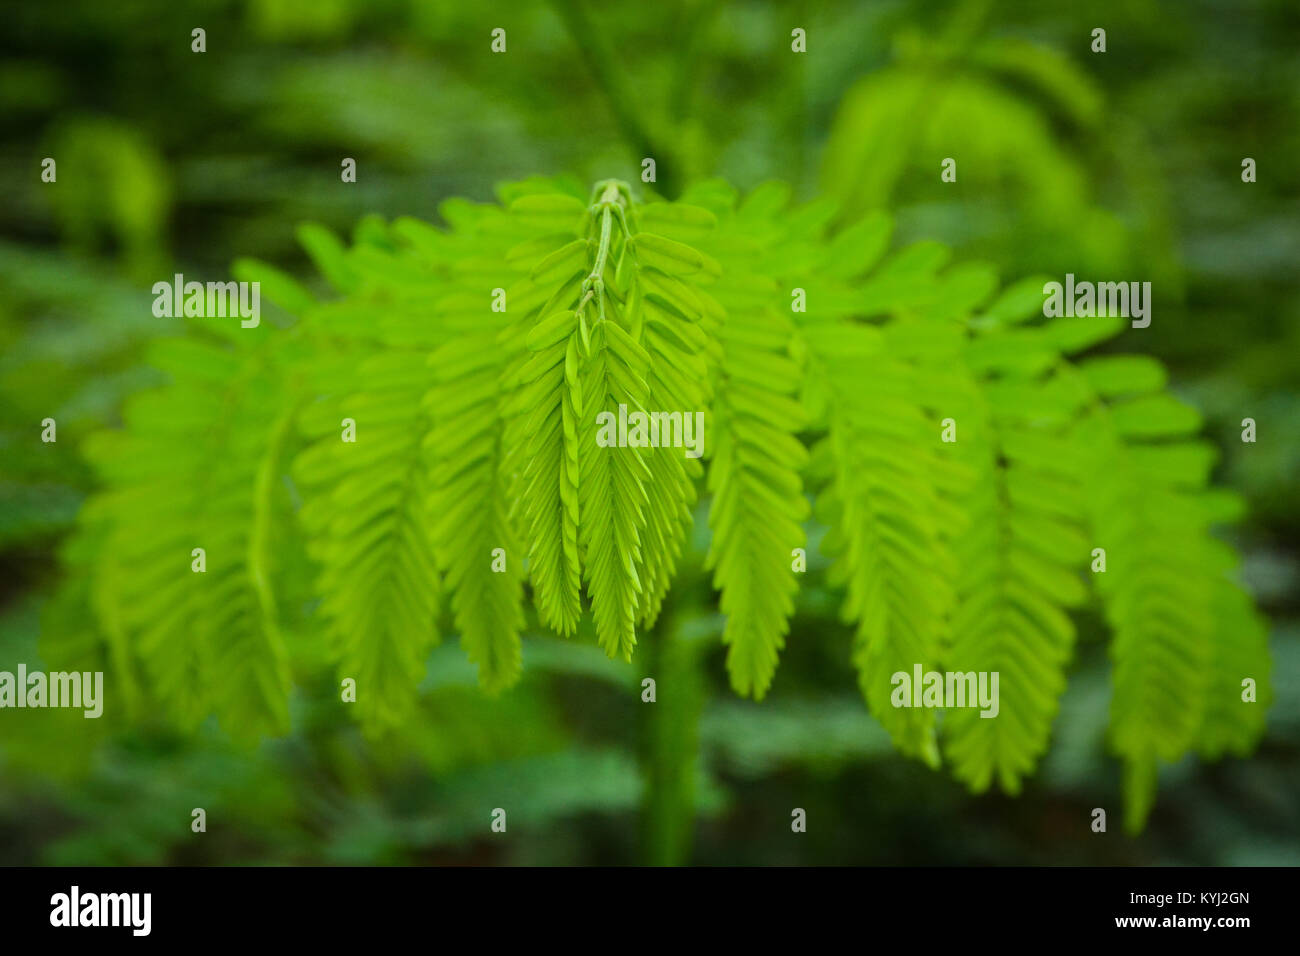 Gulmohar tree leaves pattern background Stock Photo